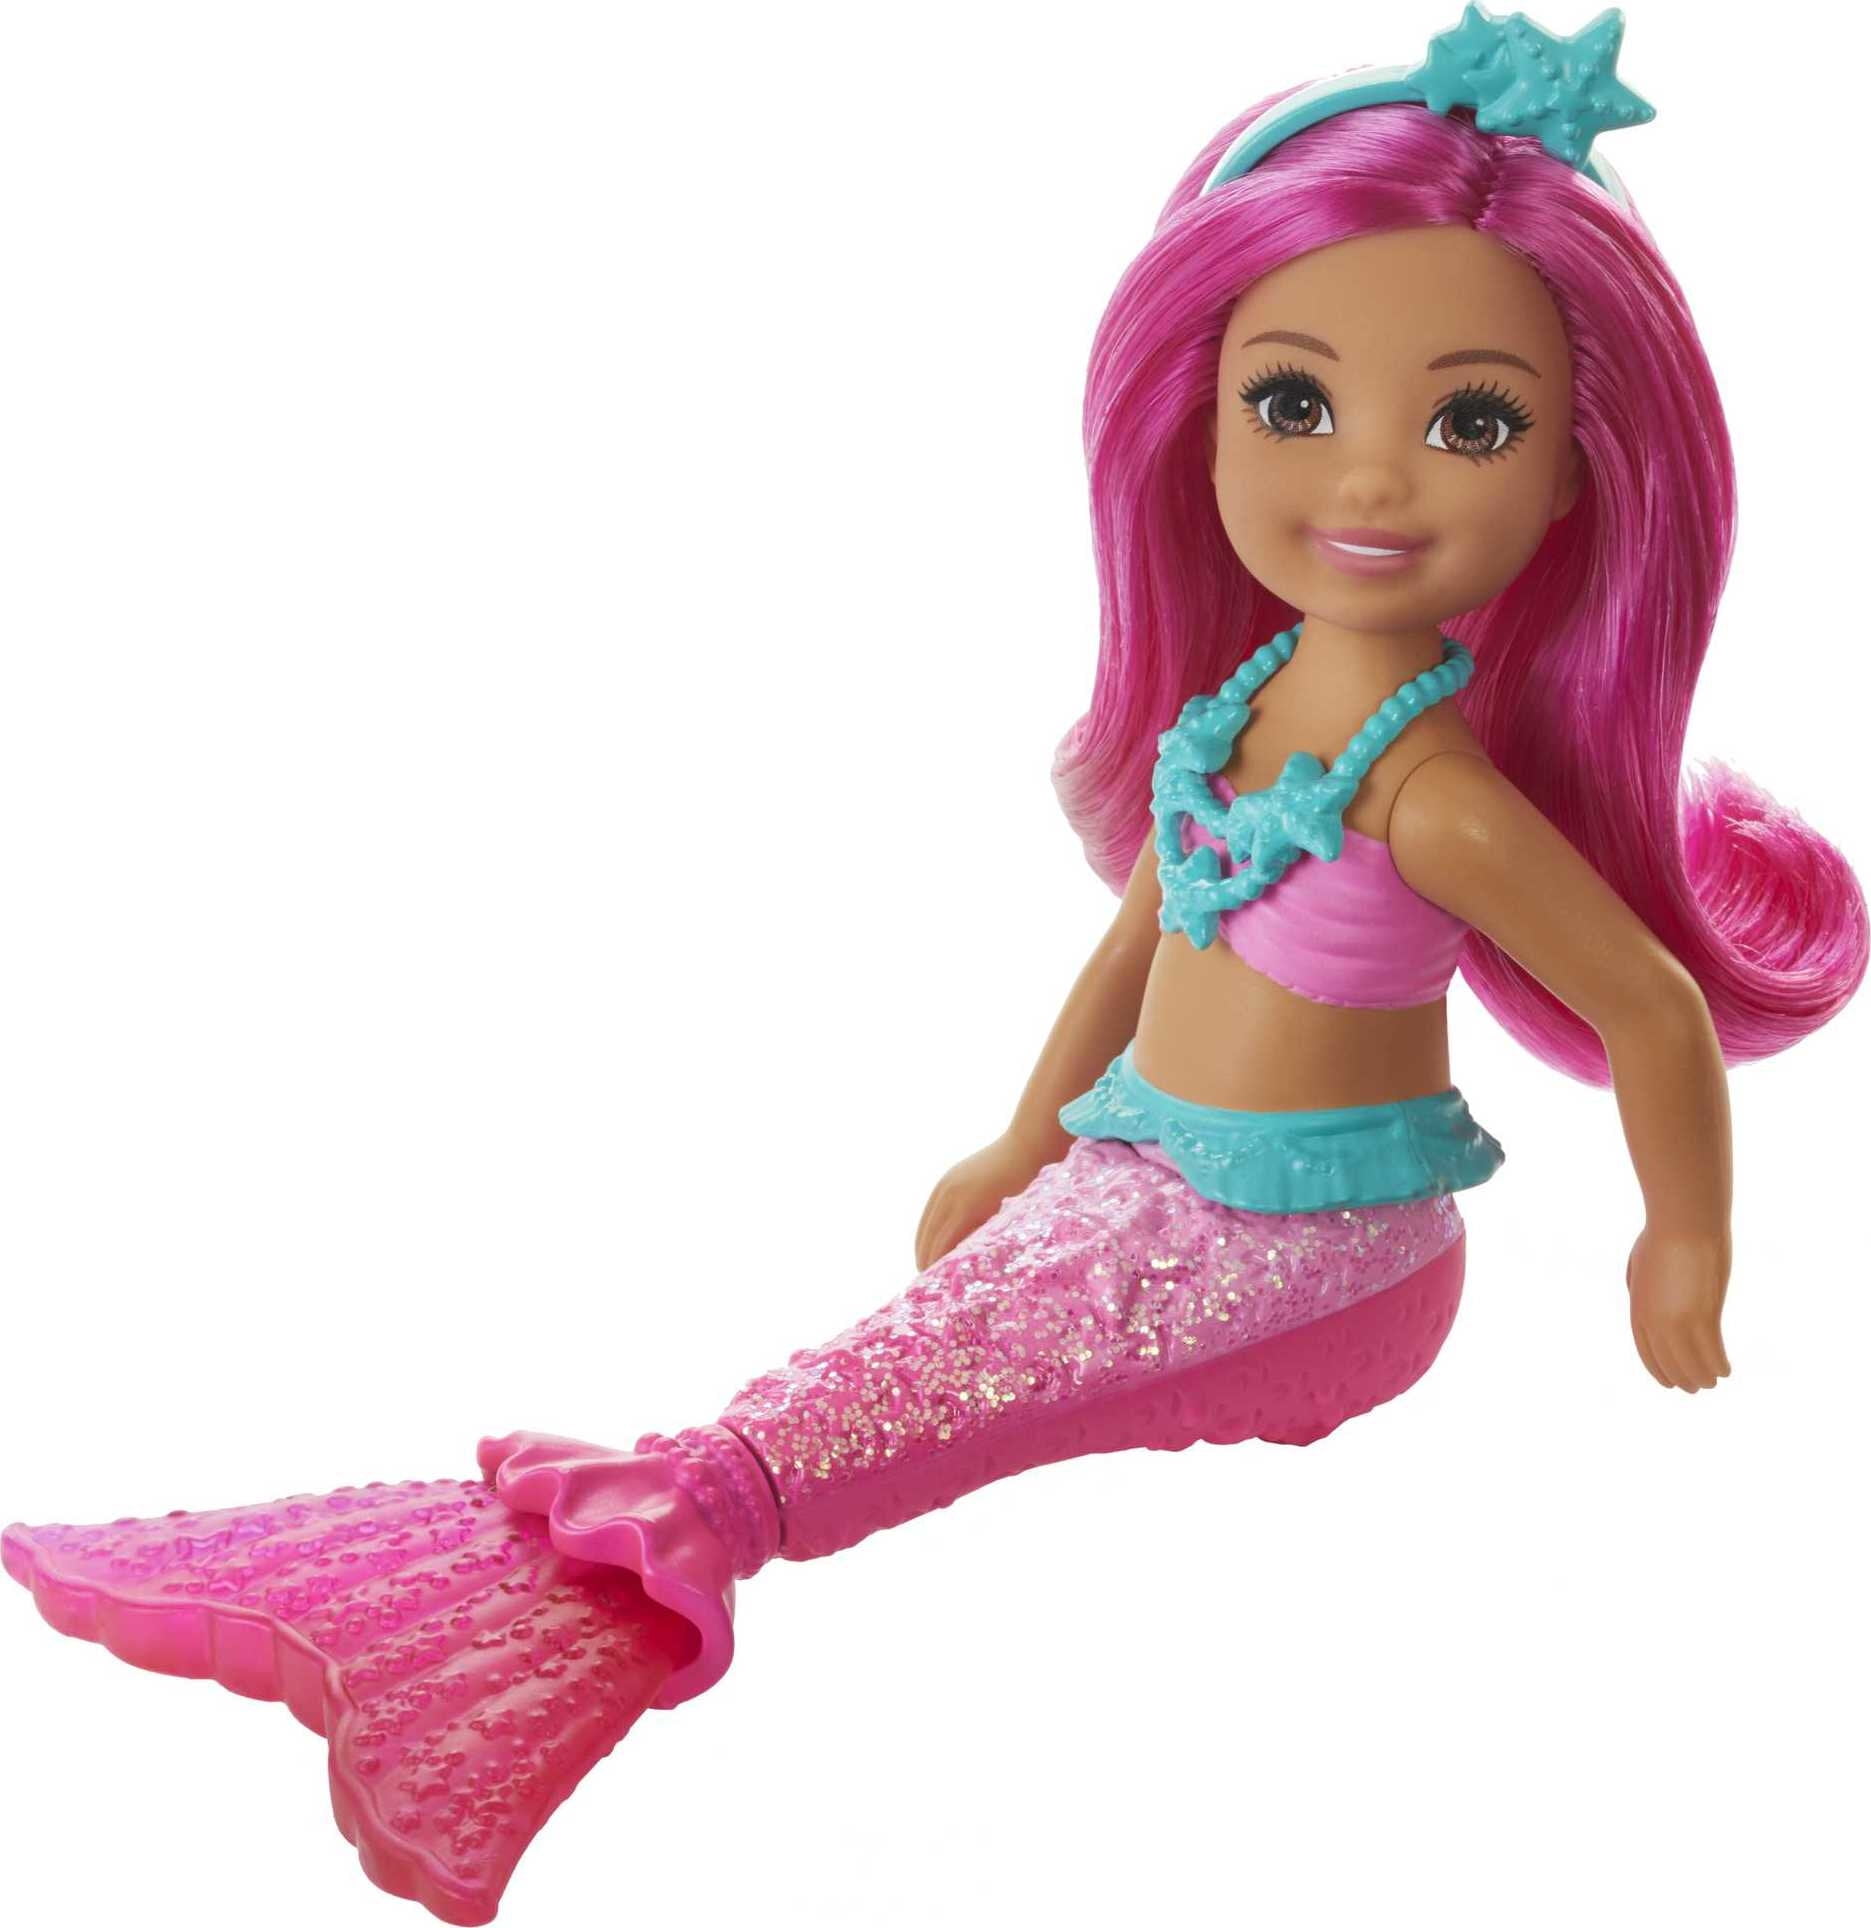 Barbie Dreamtopia Chelsea Mermaid Small Doll Pink Hair & Tail, Tiara Accessory (6.5-inch)